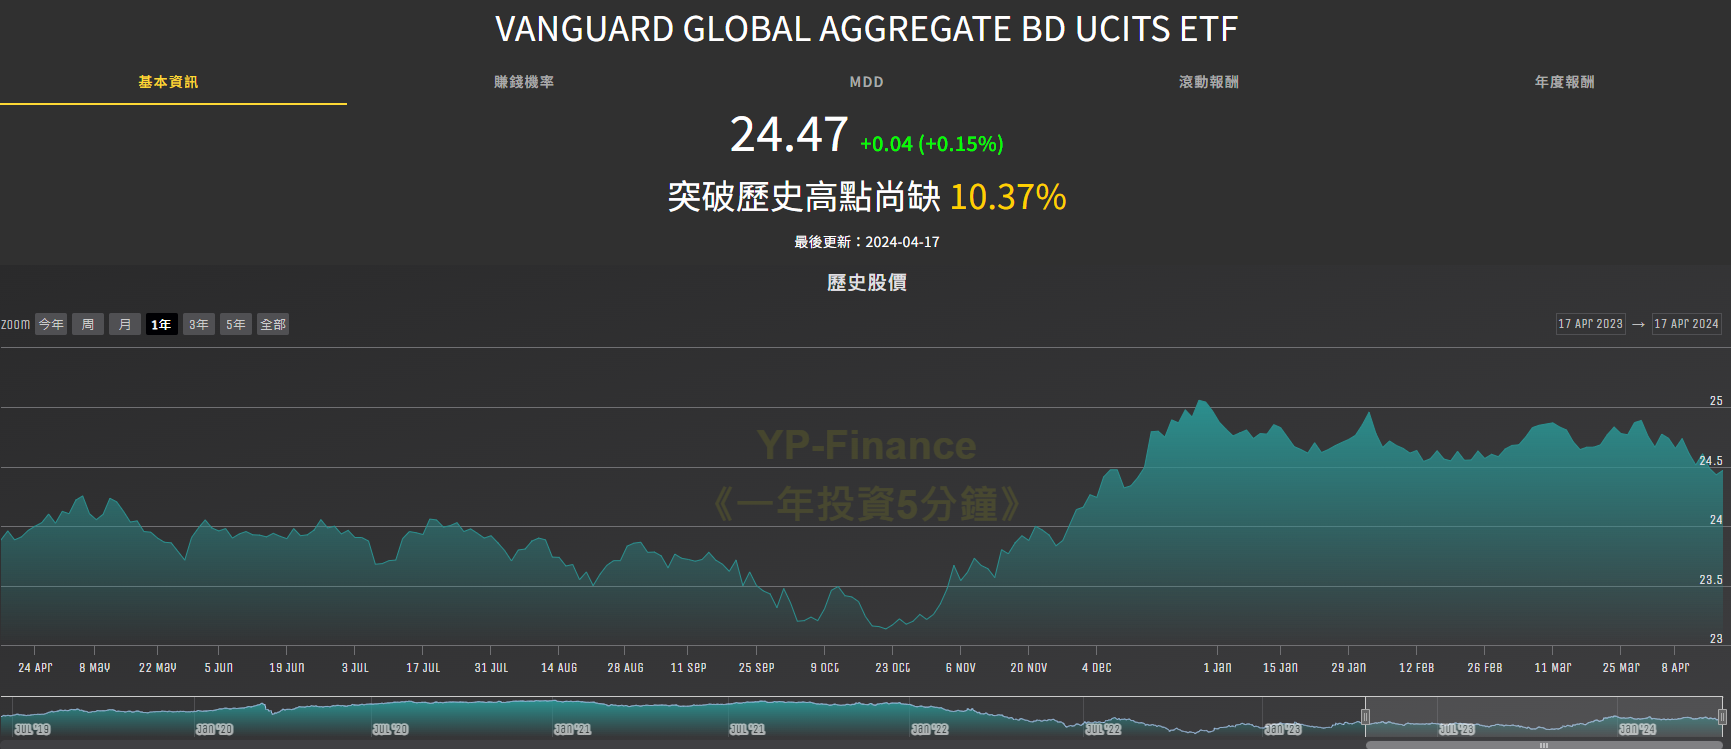 VAGU YP指投網英股美股ETF查詢資料庫平台 